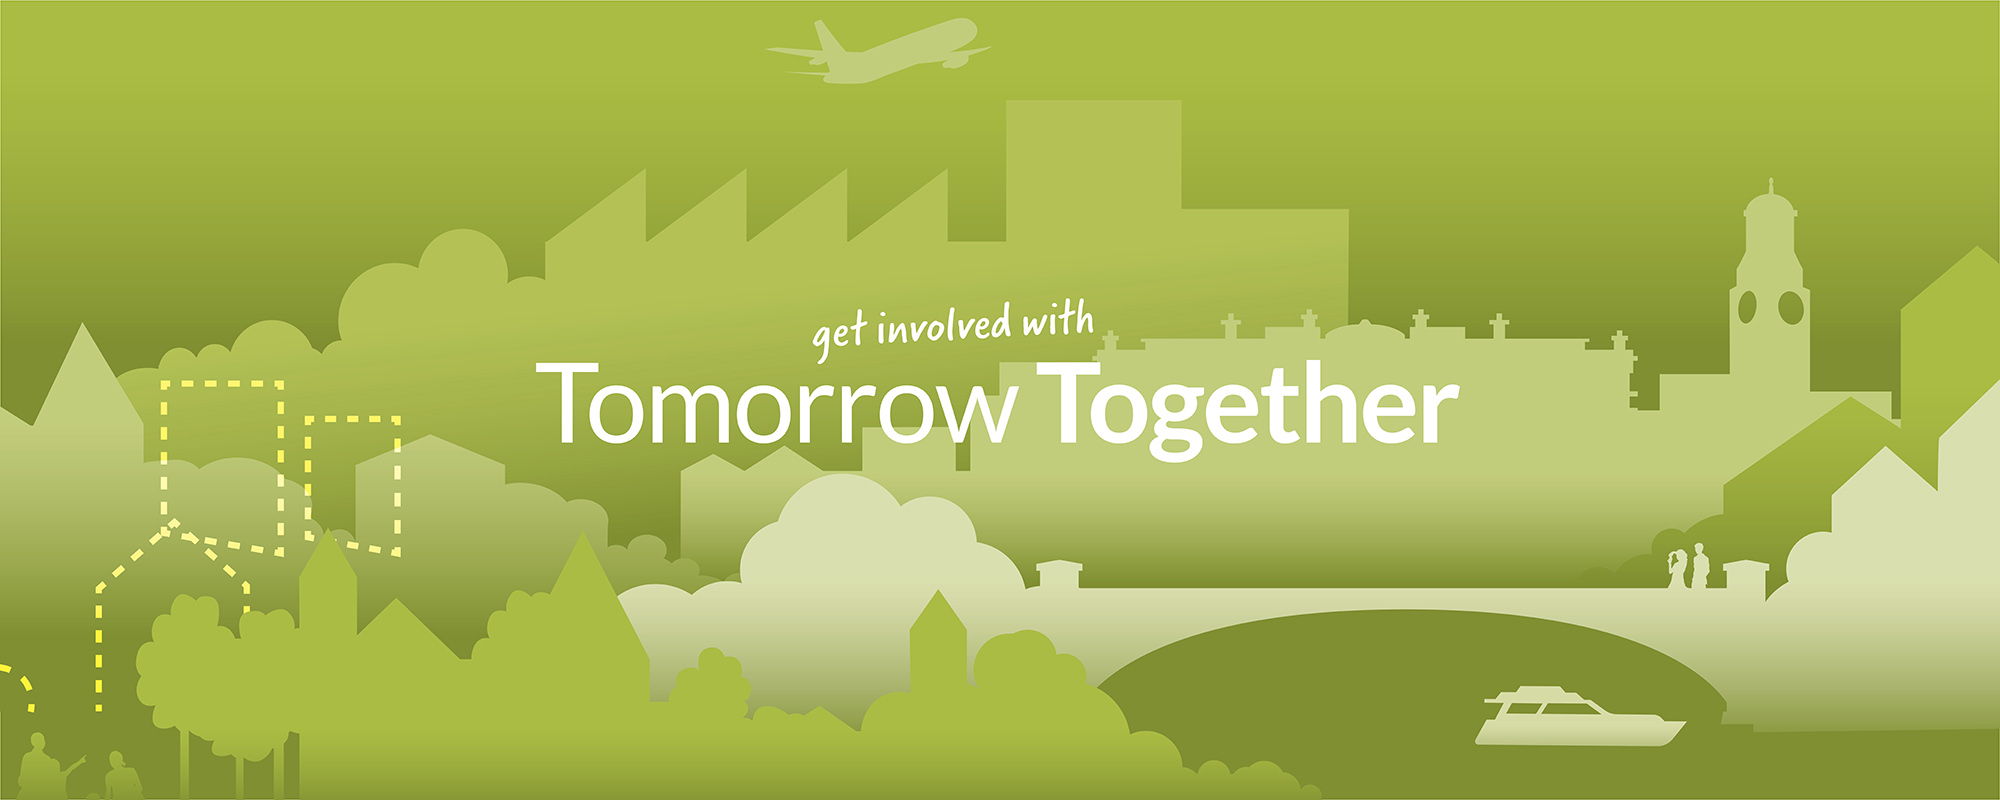 Tomorrow-Together-Web-Banner-.jpg